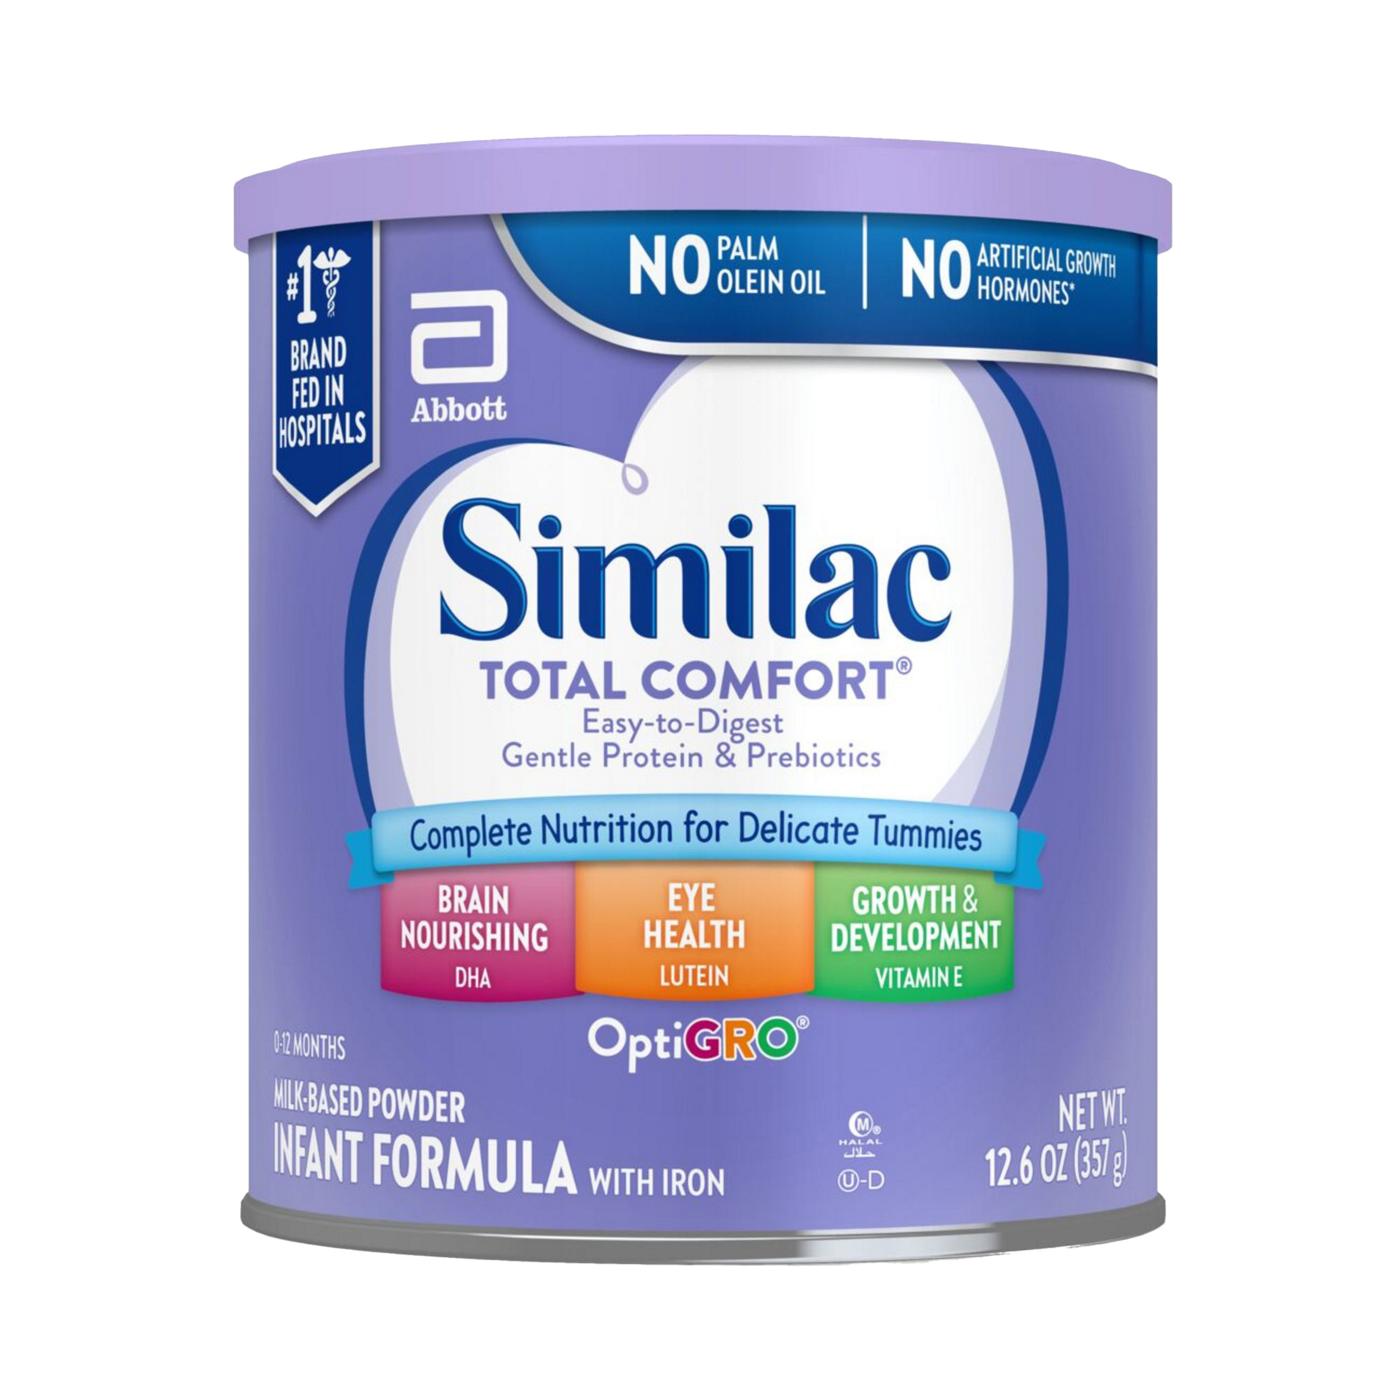 Similac Total Comfort Milk-Based Powder Infant Formula with Iron; image 1 of 10